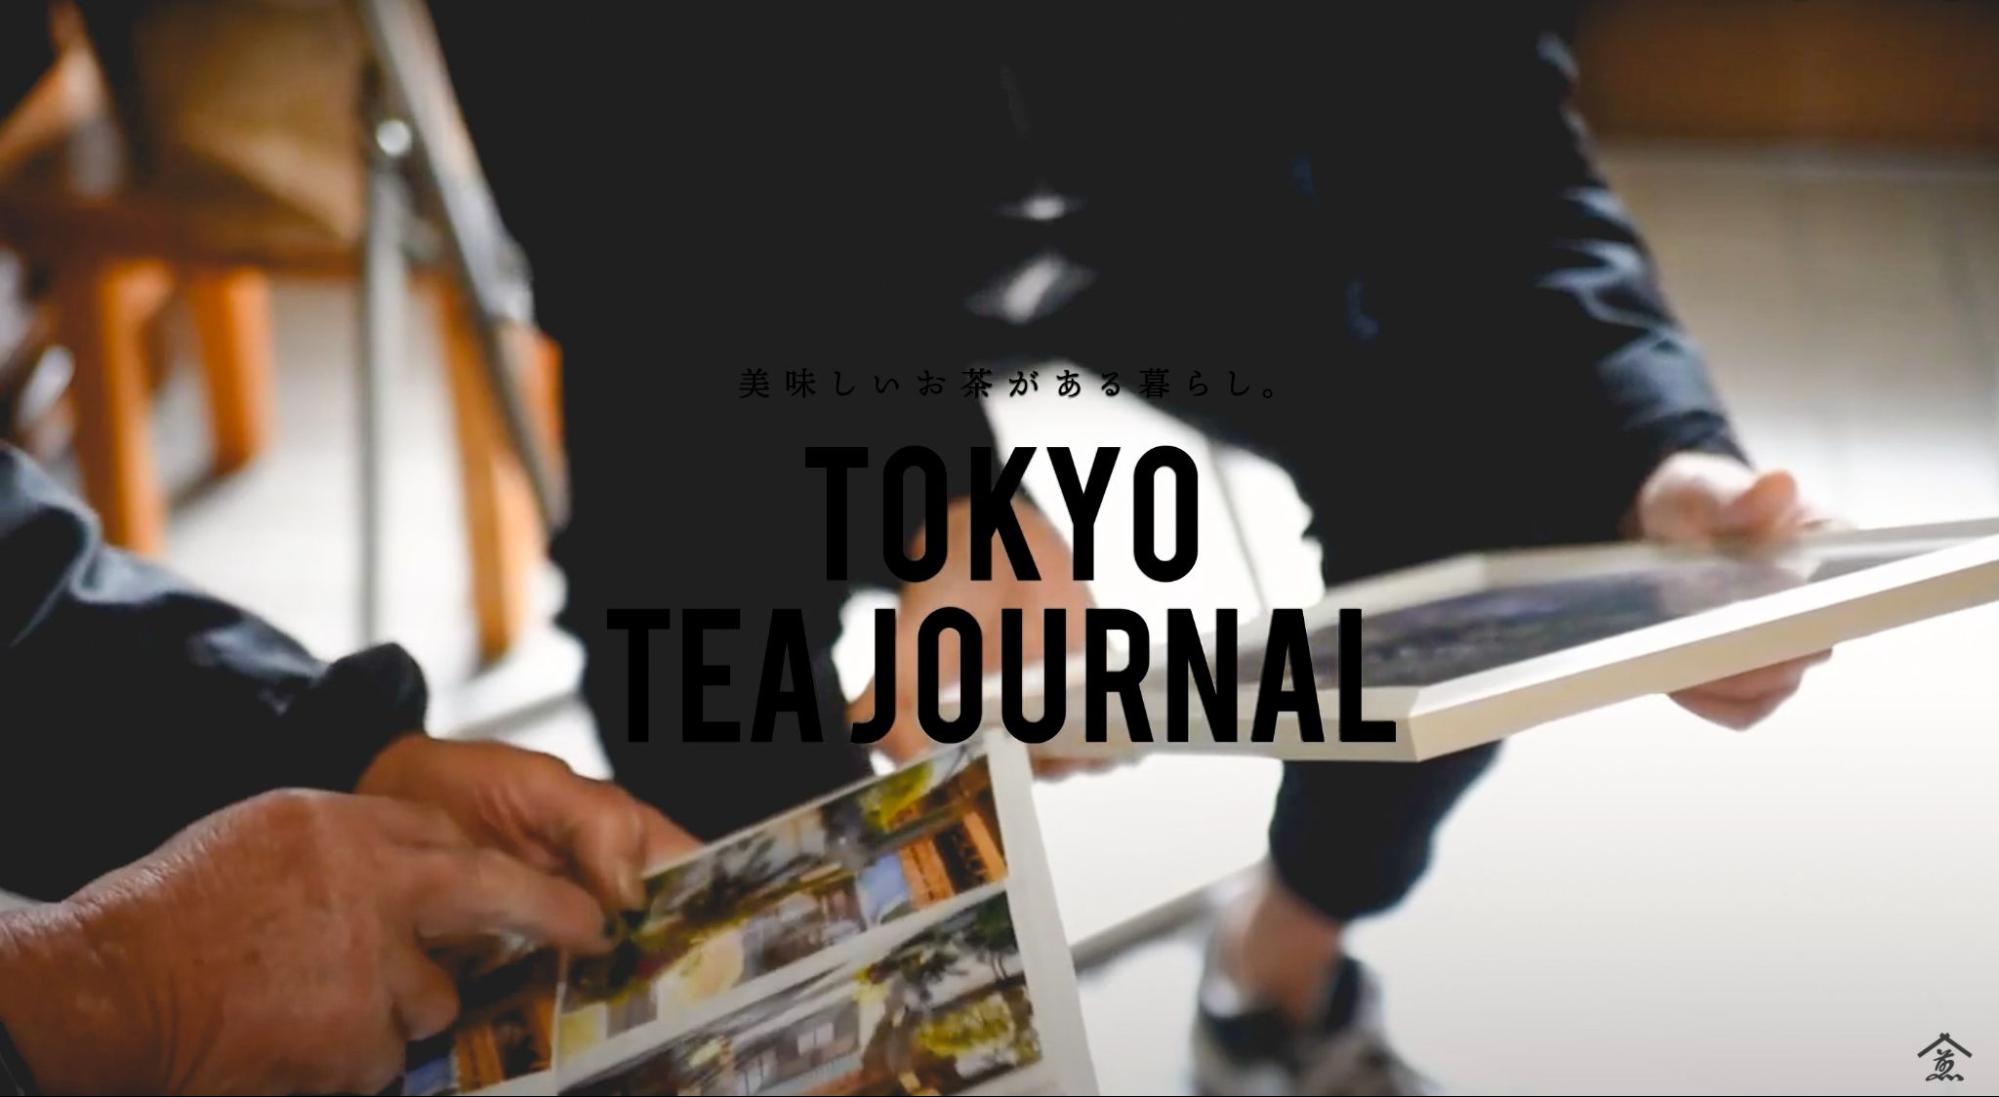 TOKYO TEA JOURNAL